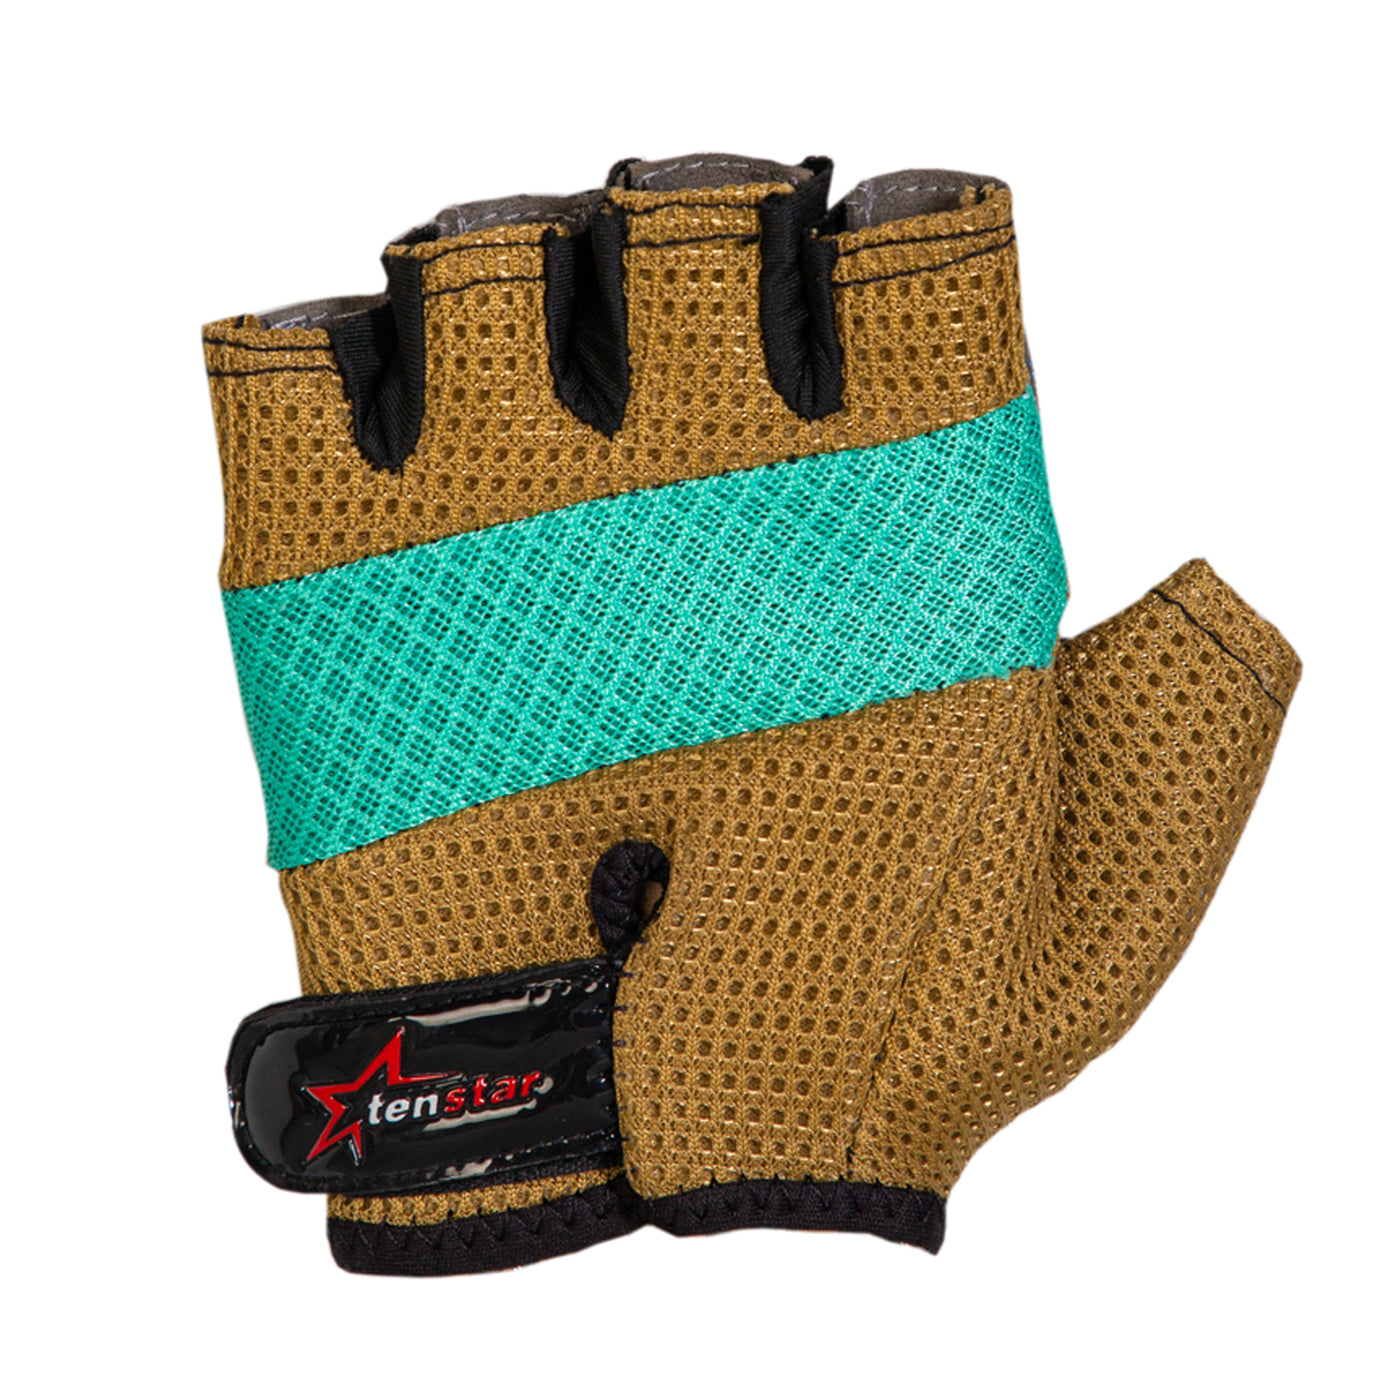 Tenstar Tenstar Airmax Gym Gloves for Men - Brown freeshipping - athletive Gym Gloves - Men athletive